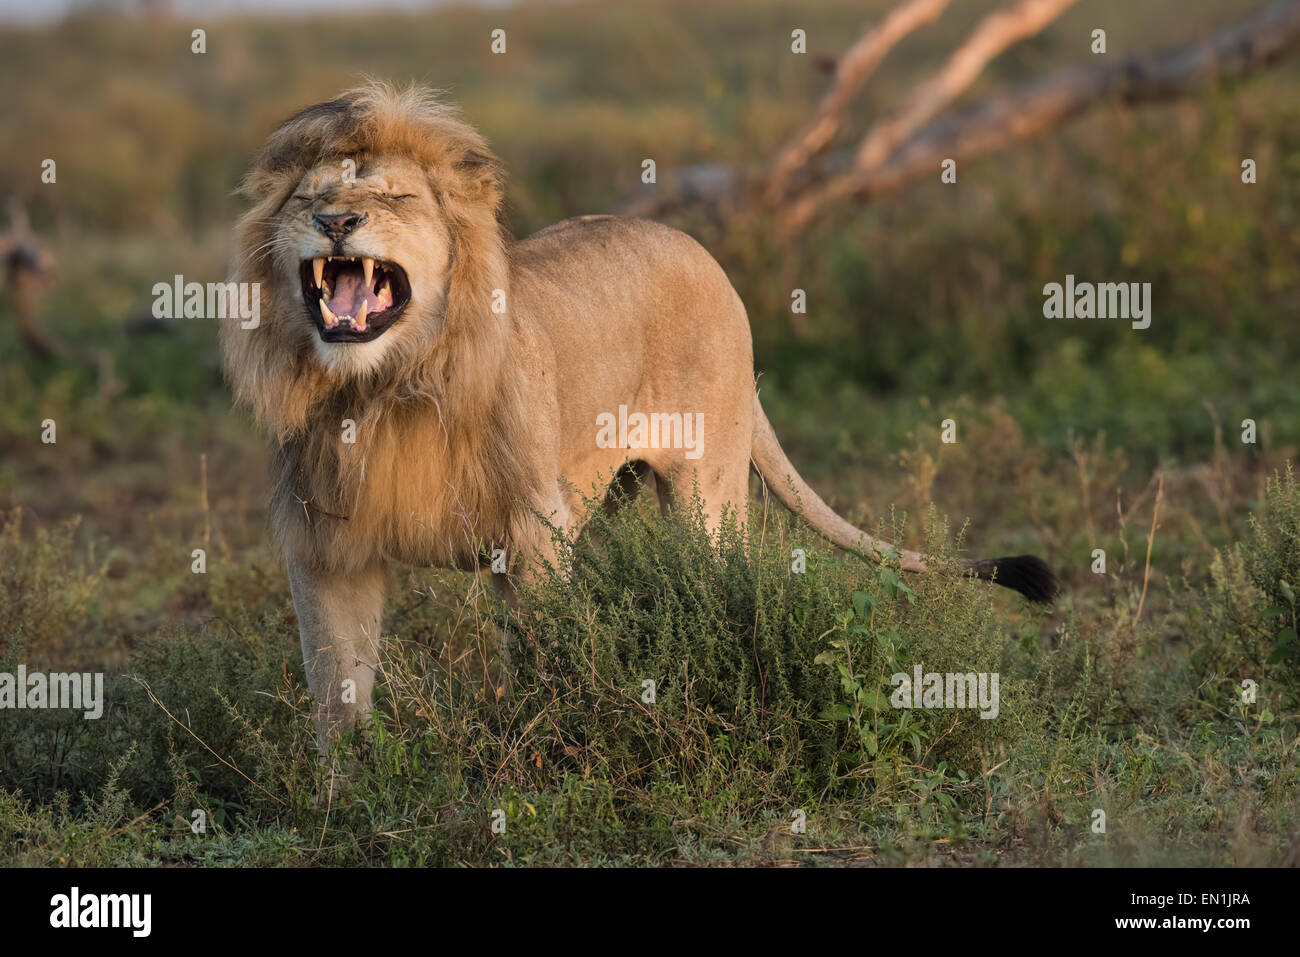 Male lion flehmen behavior. Stock Photo